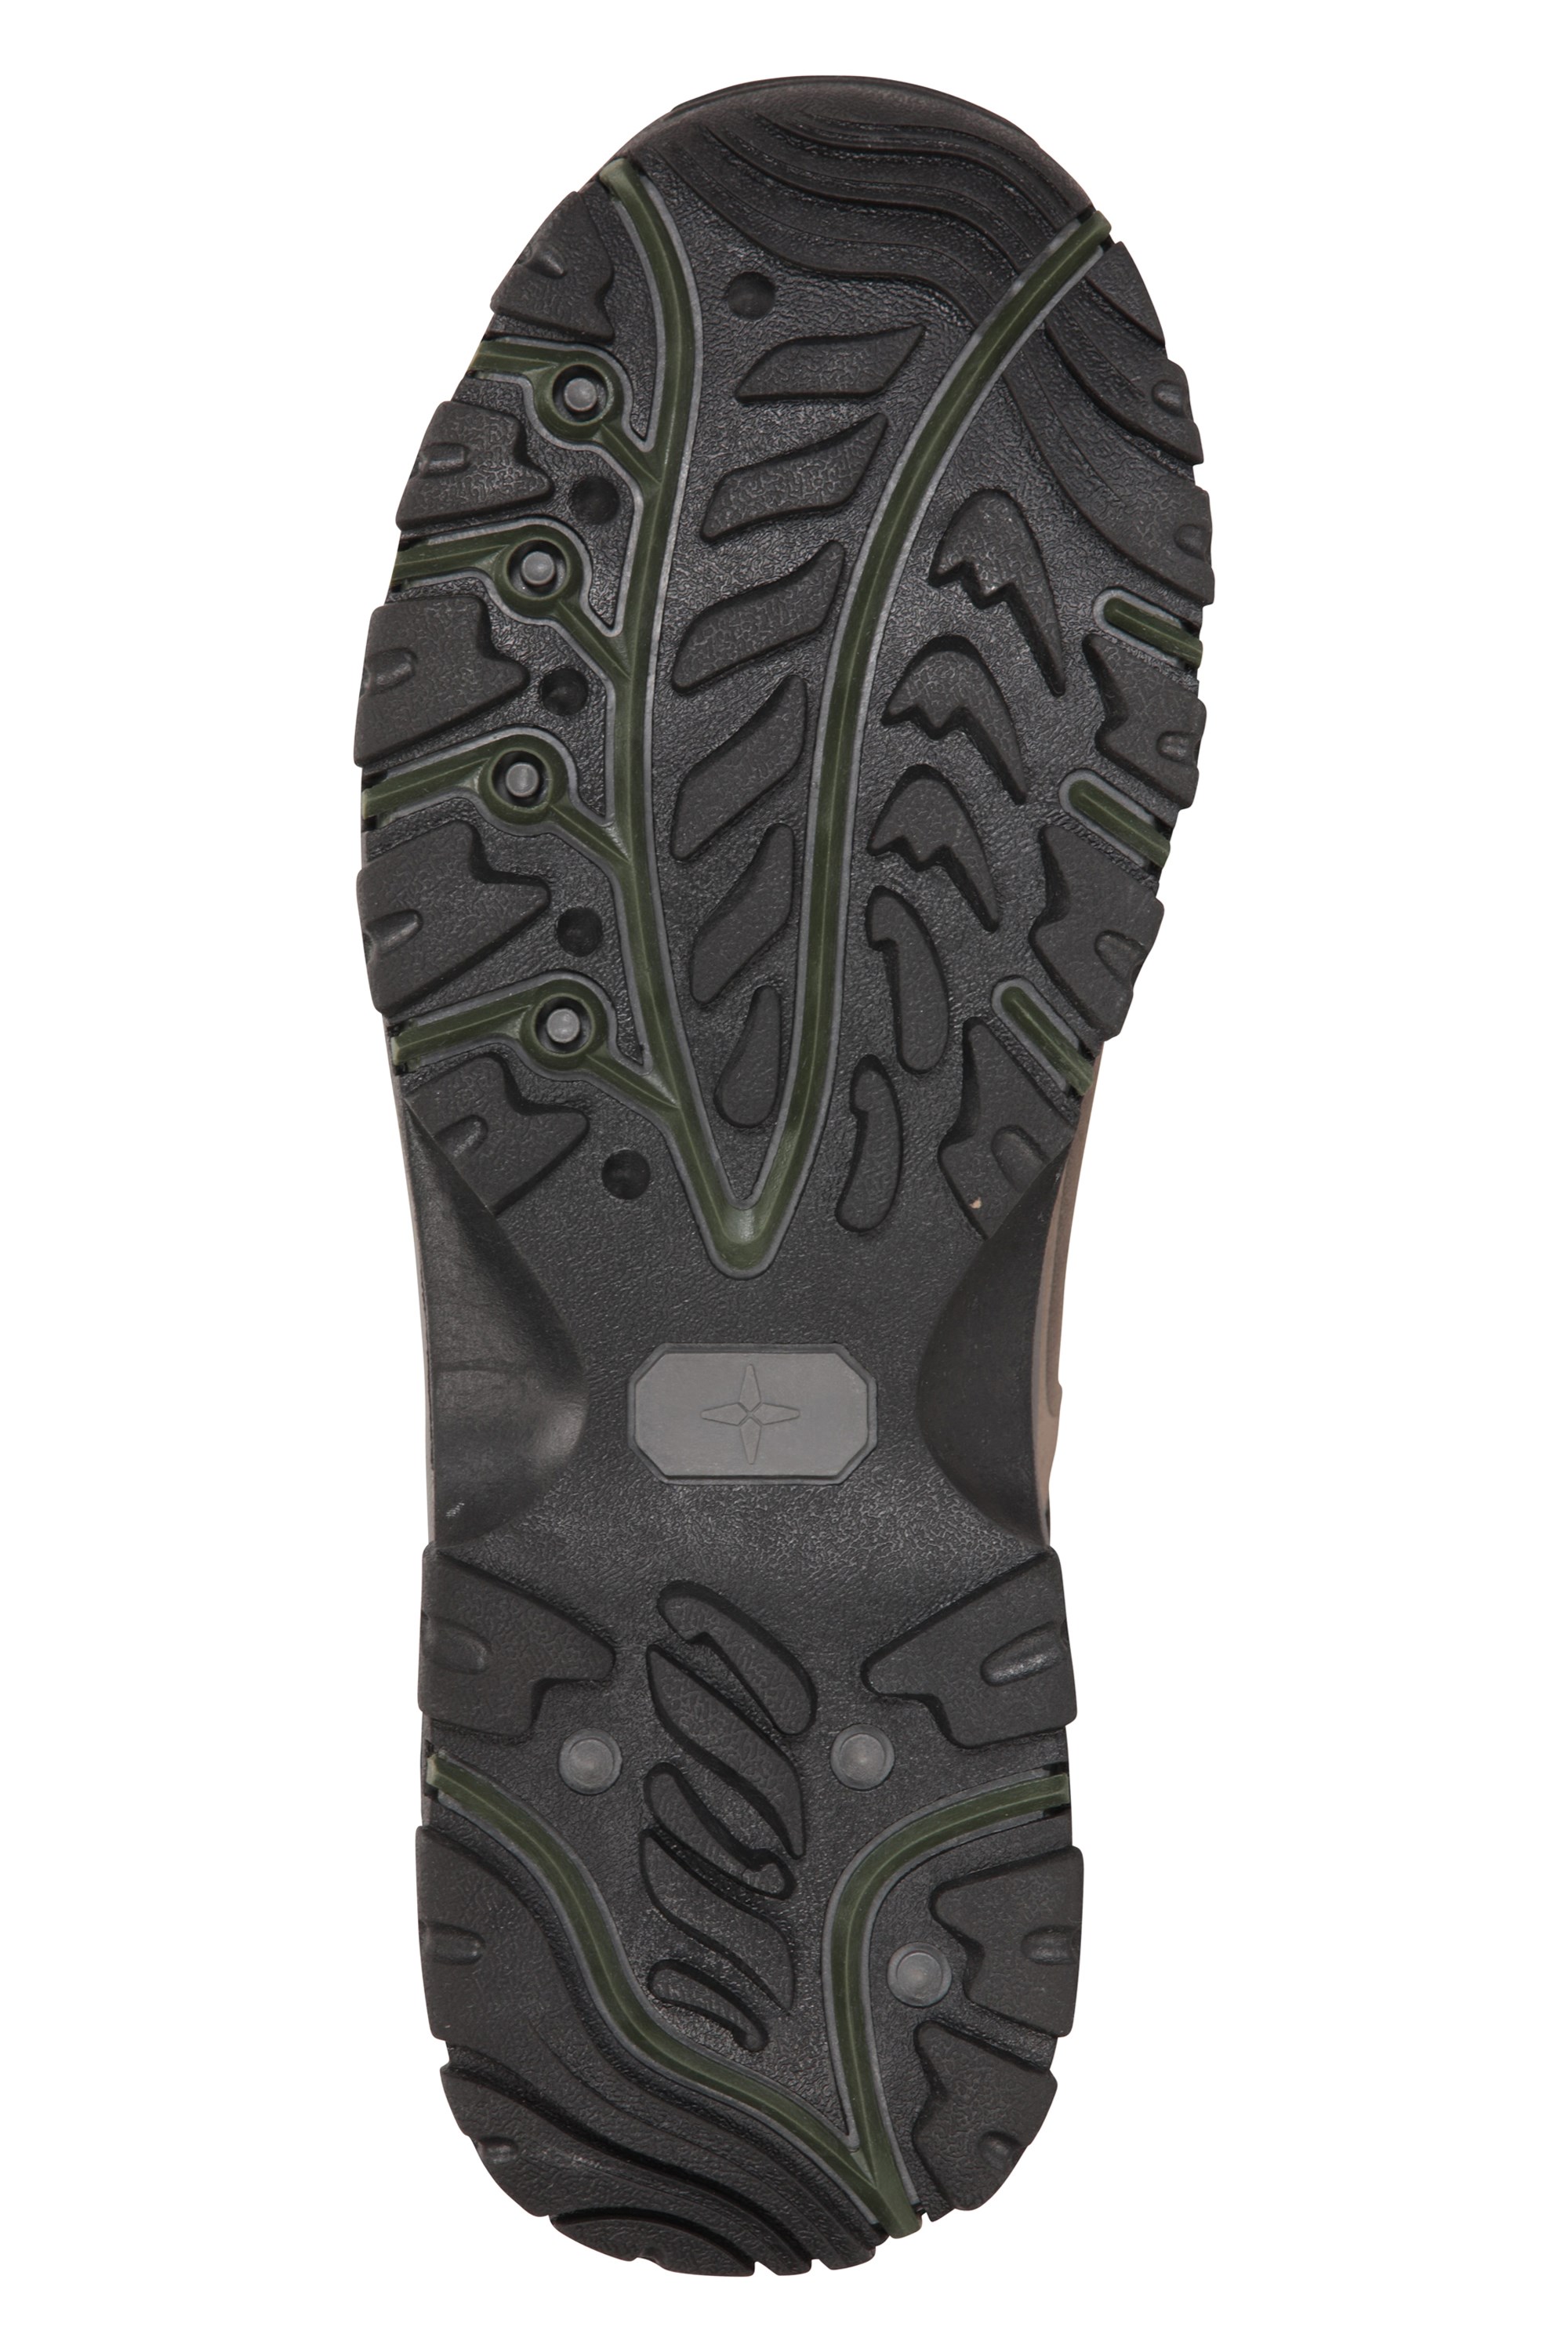 5000 Mile Guarantee Marca: Mountain WarehouseMountain Warehouse Quest Mens Waterproof Walking Boots Antibacterial Insole Footwear Nubuck Leather Best for Hiking Trekking 